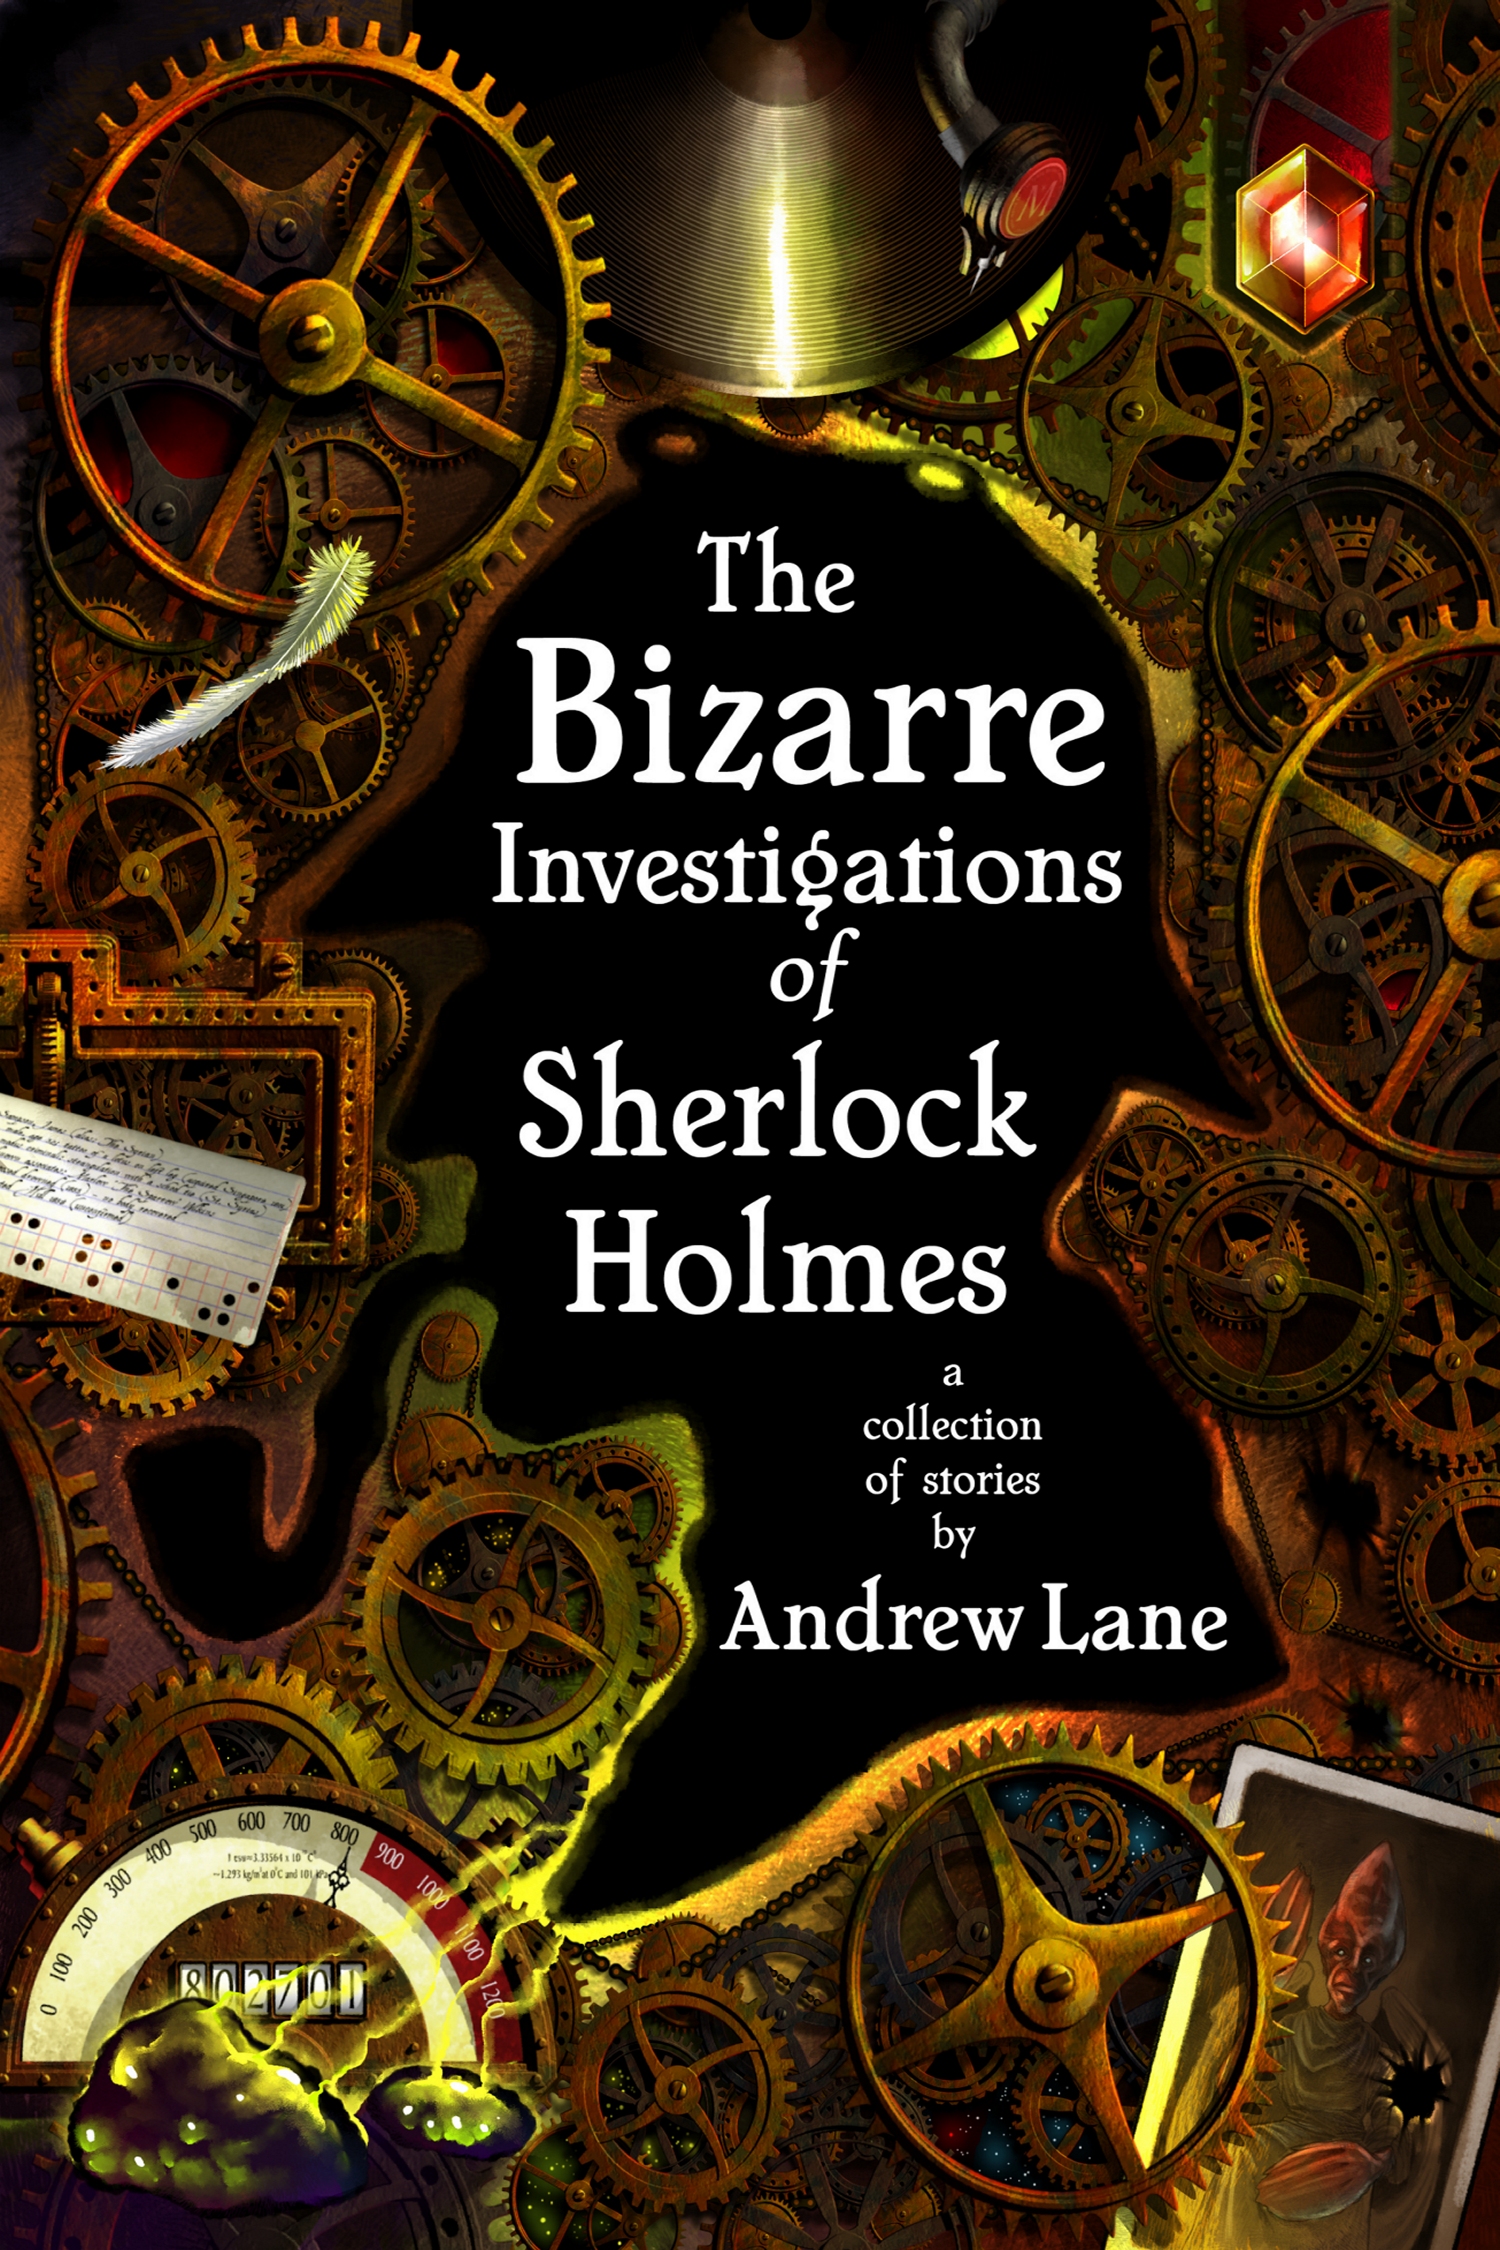 The Bizarre Investigations of Sherlock Holmes